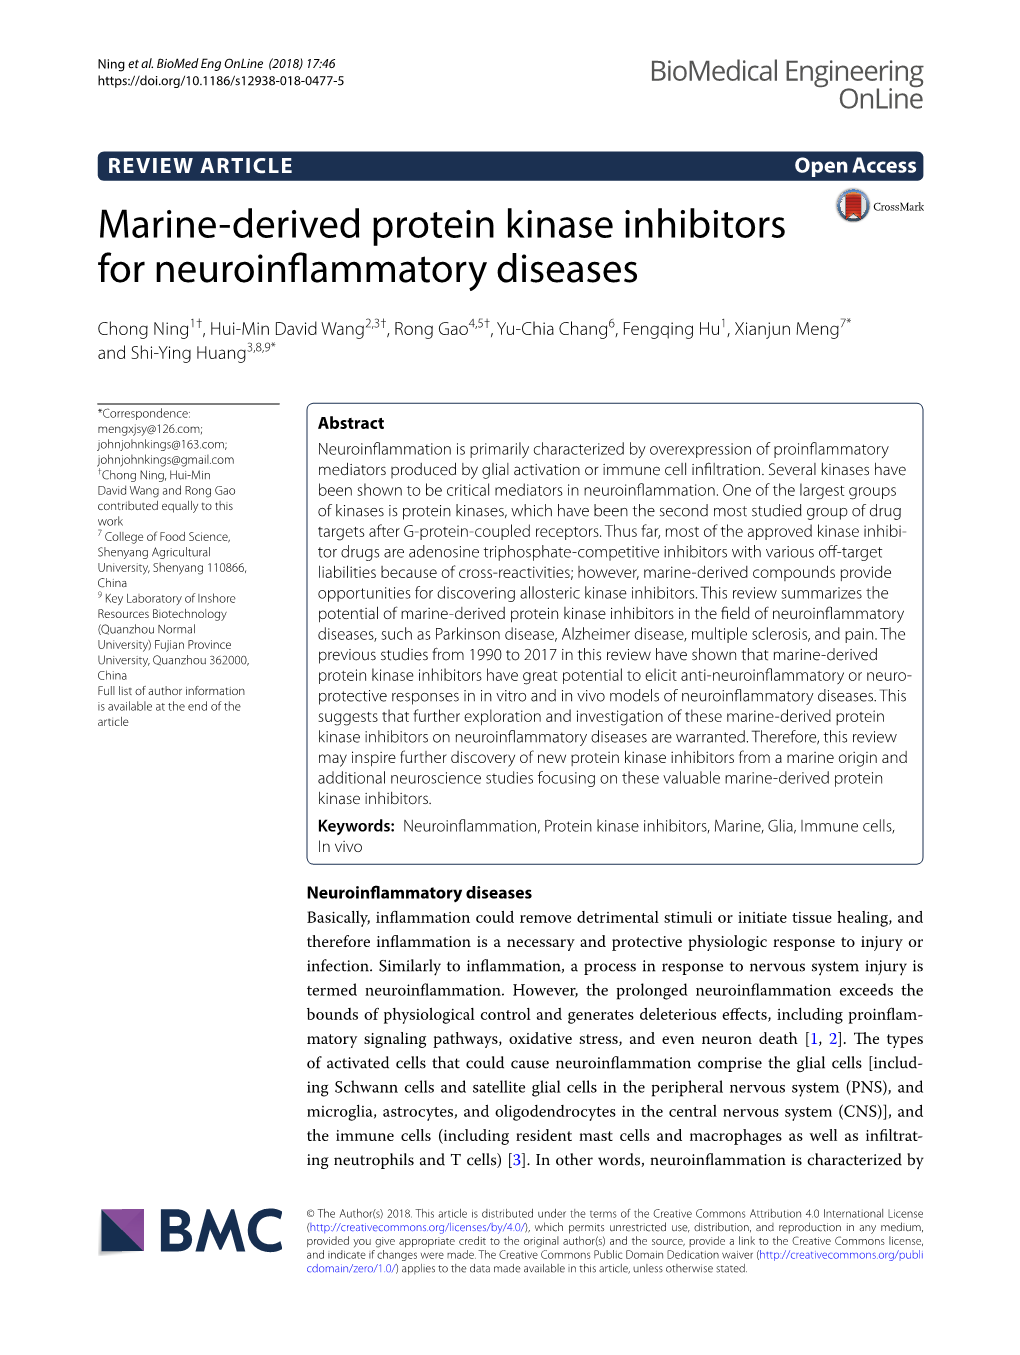 Marine-Derived Protein Kinase Inhibitors for Neuroinflammatory